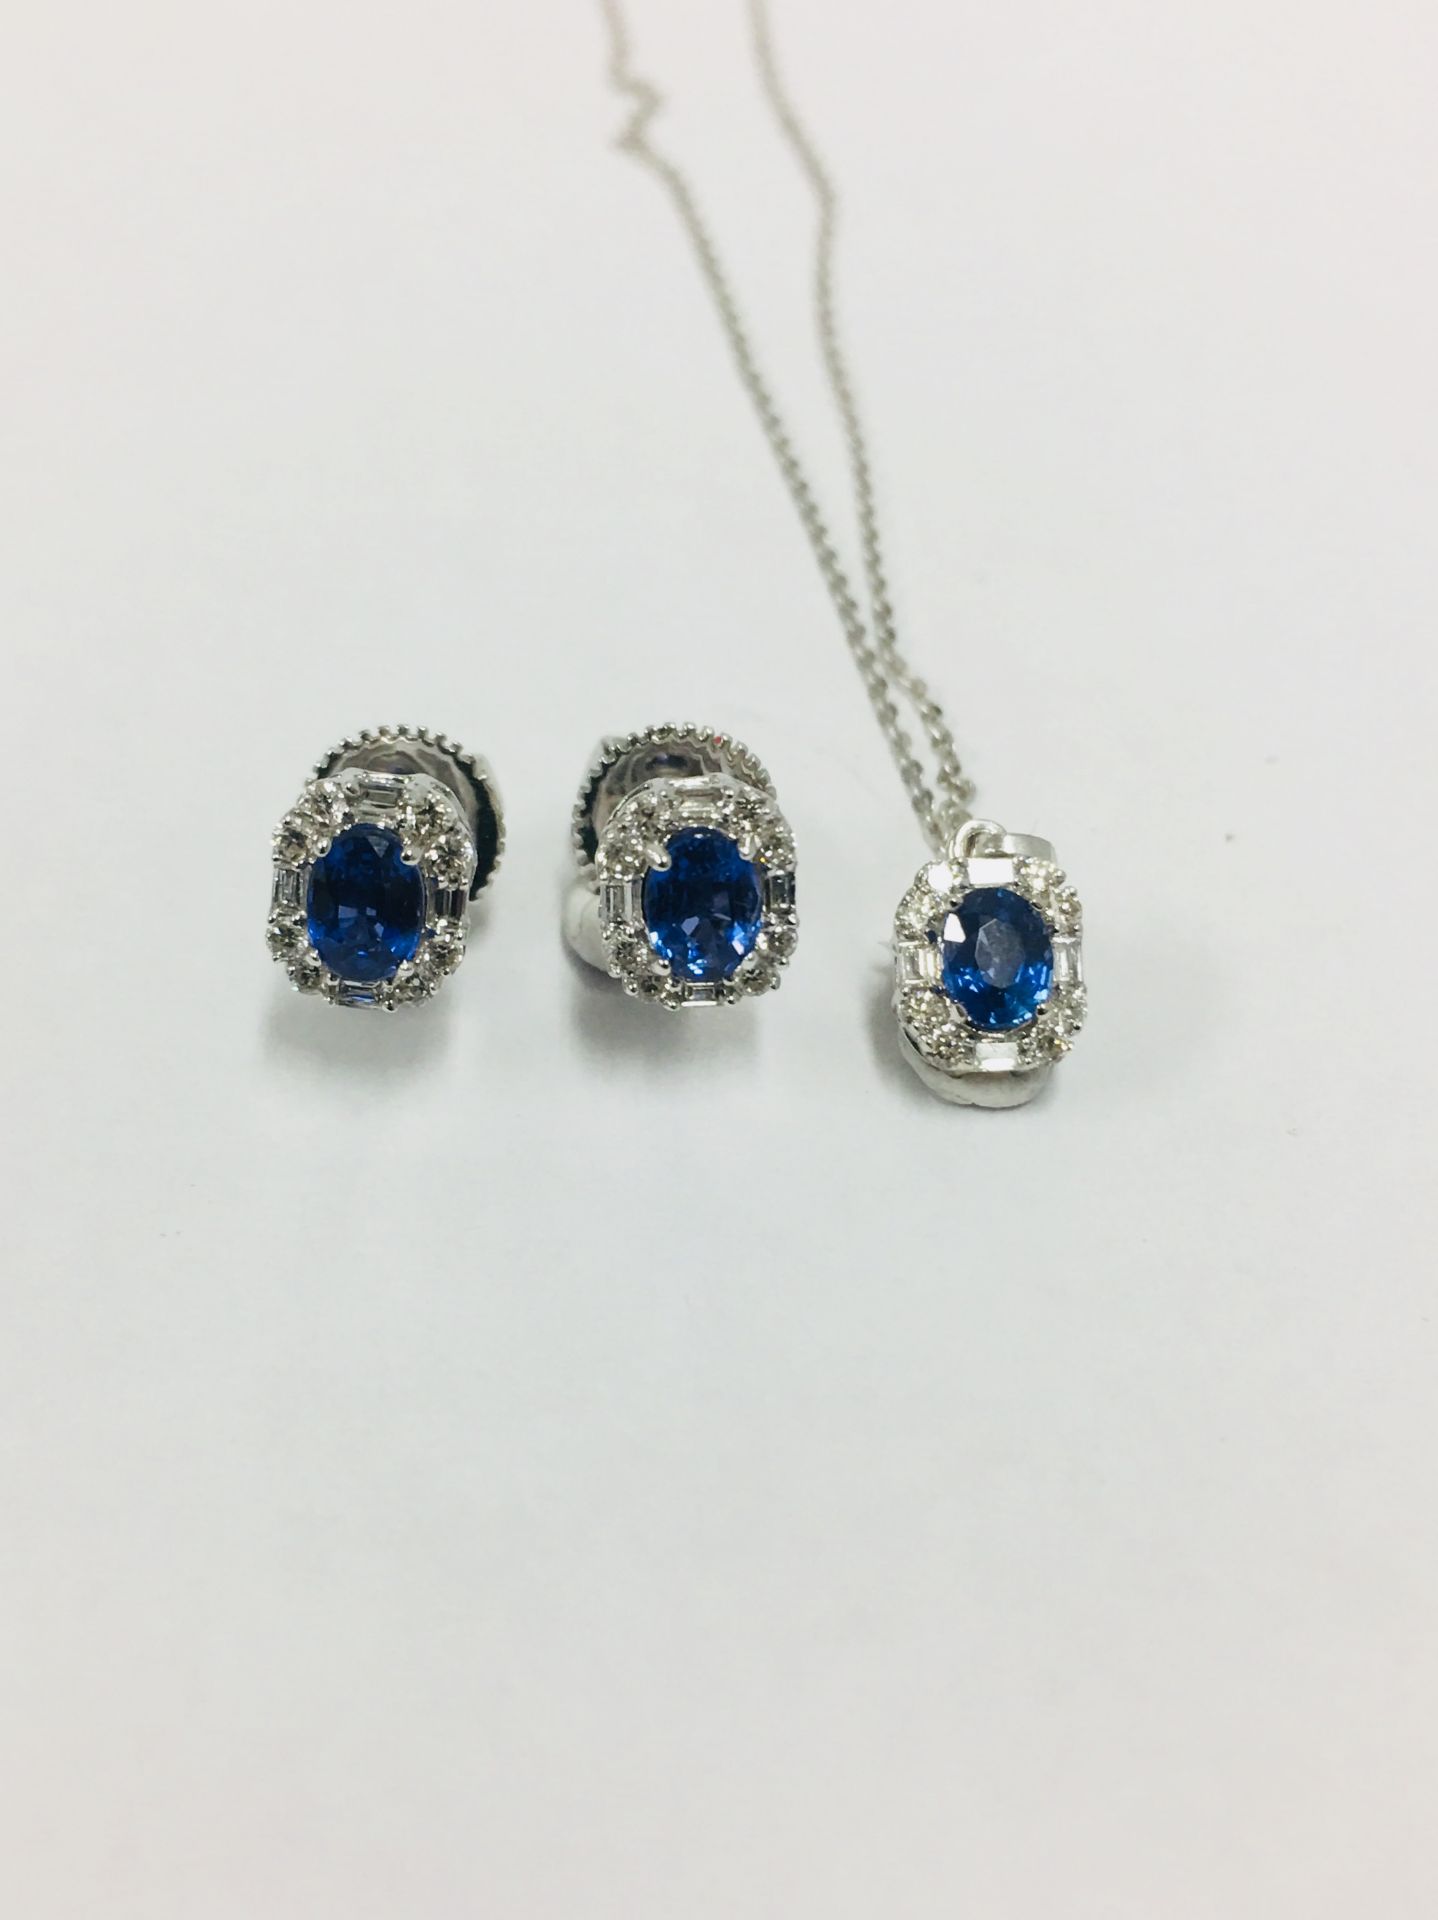 18ct Sapphire diamond Earrings and Pendant Set,0.78ct natural sapphire,0.24ct diamond brilliant - Image 2 of 5